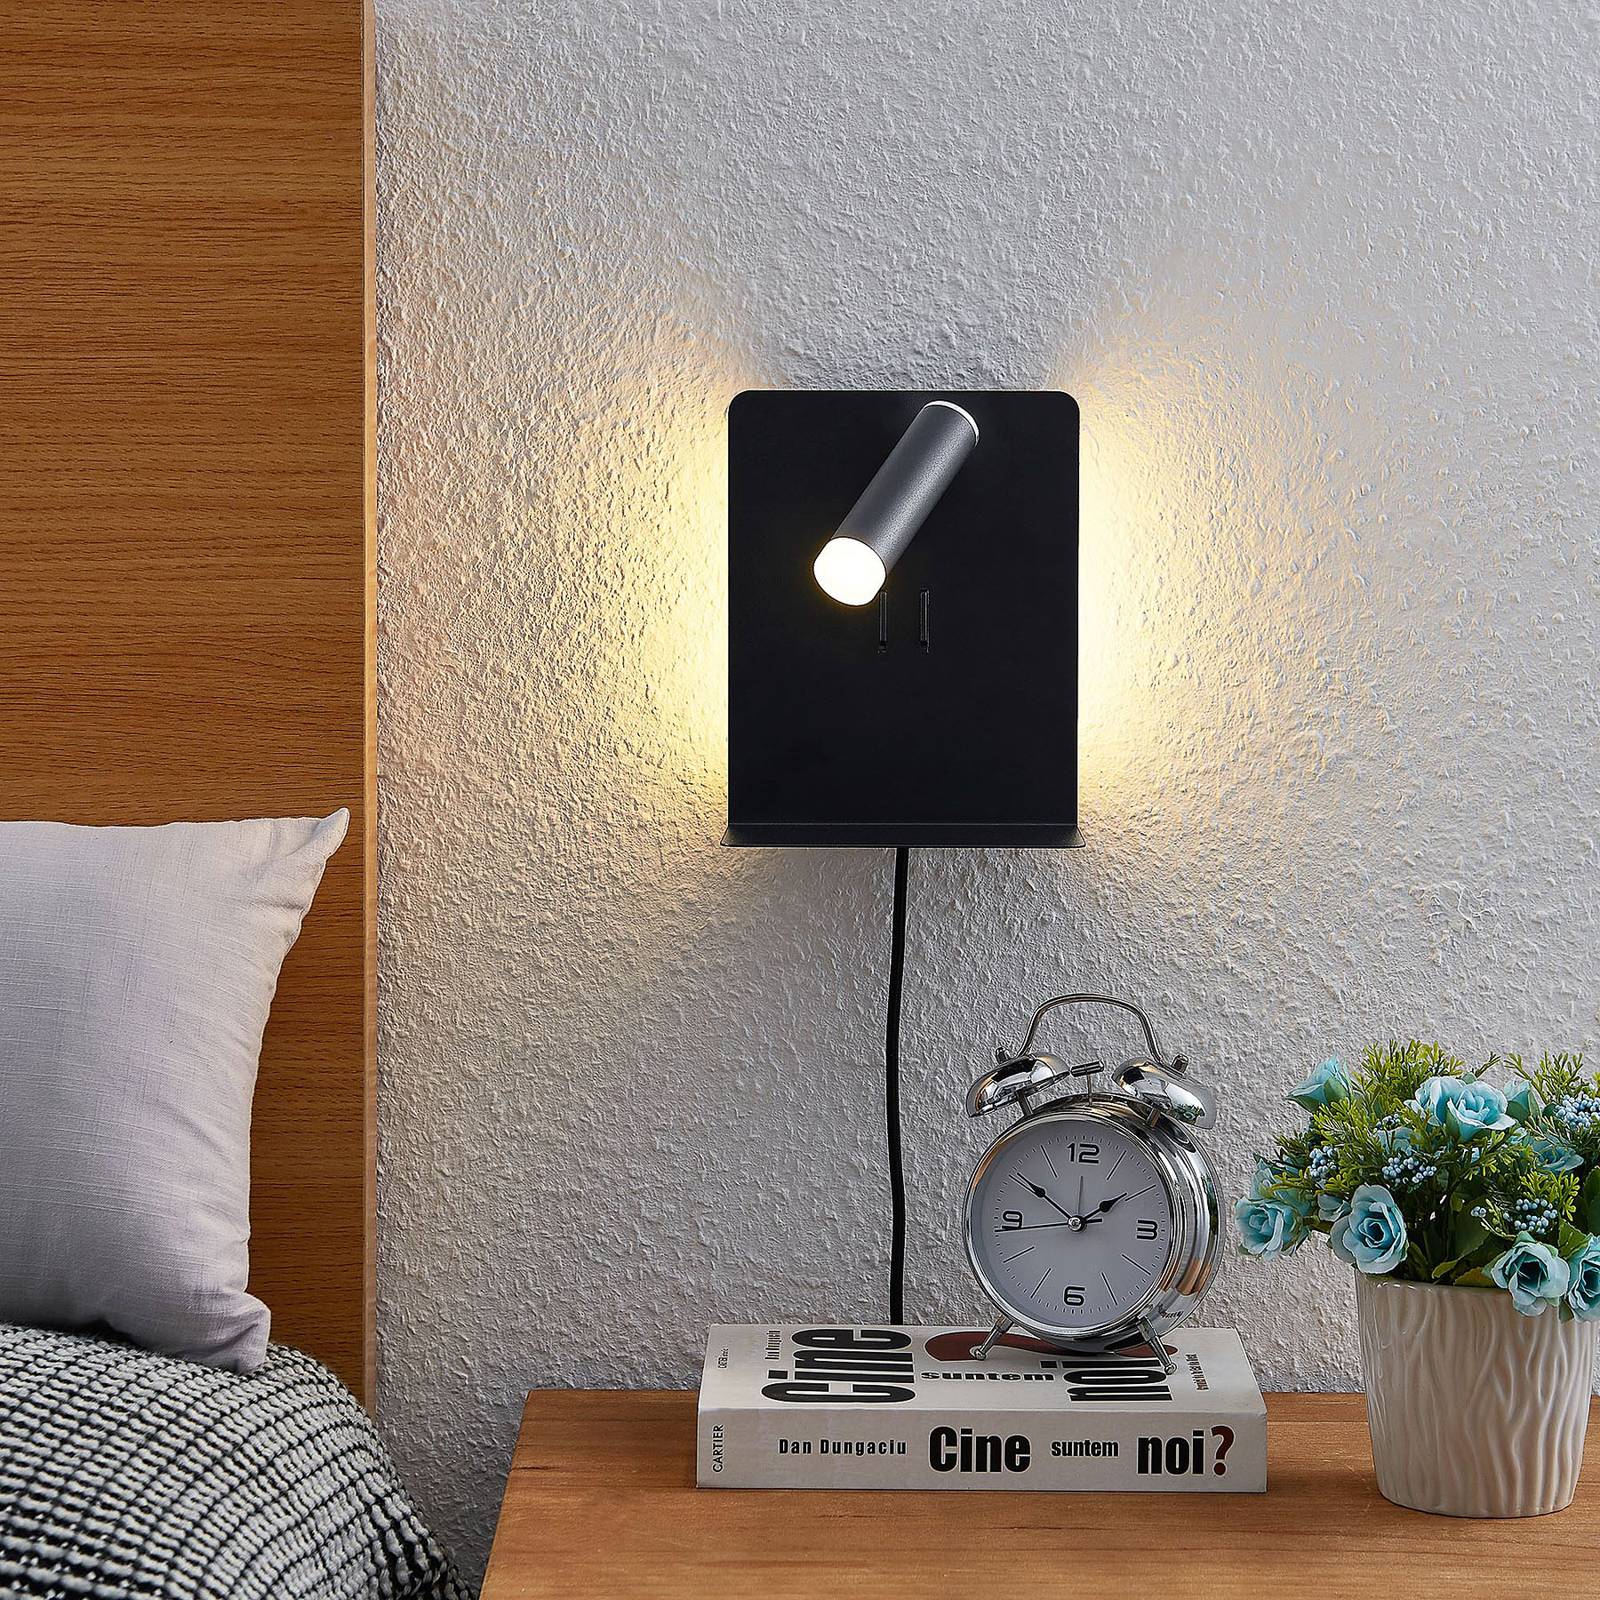 Lucande Zavi -LED-seinäspotti, taso, USB, musta